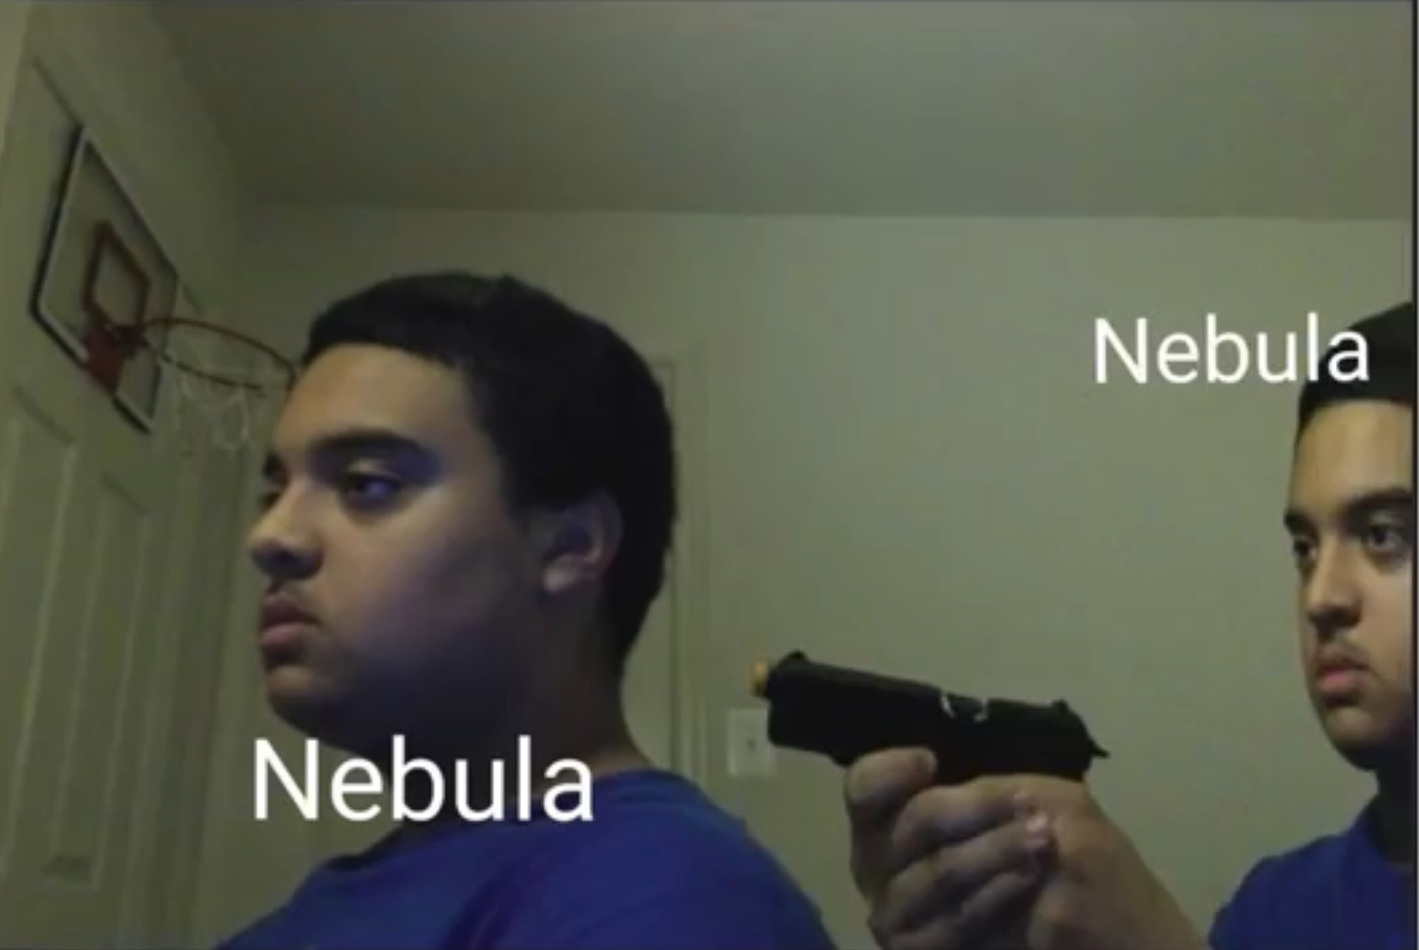 nebula - meme